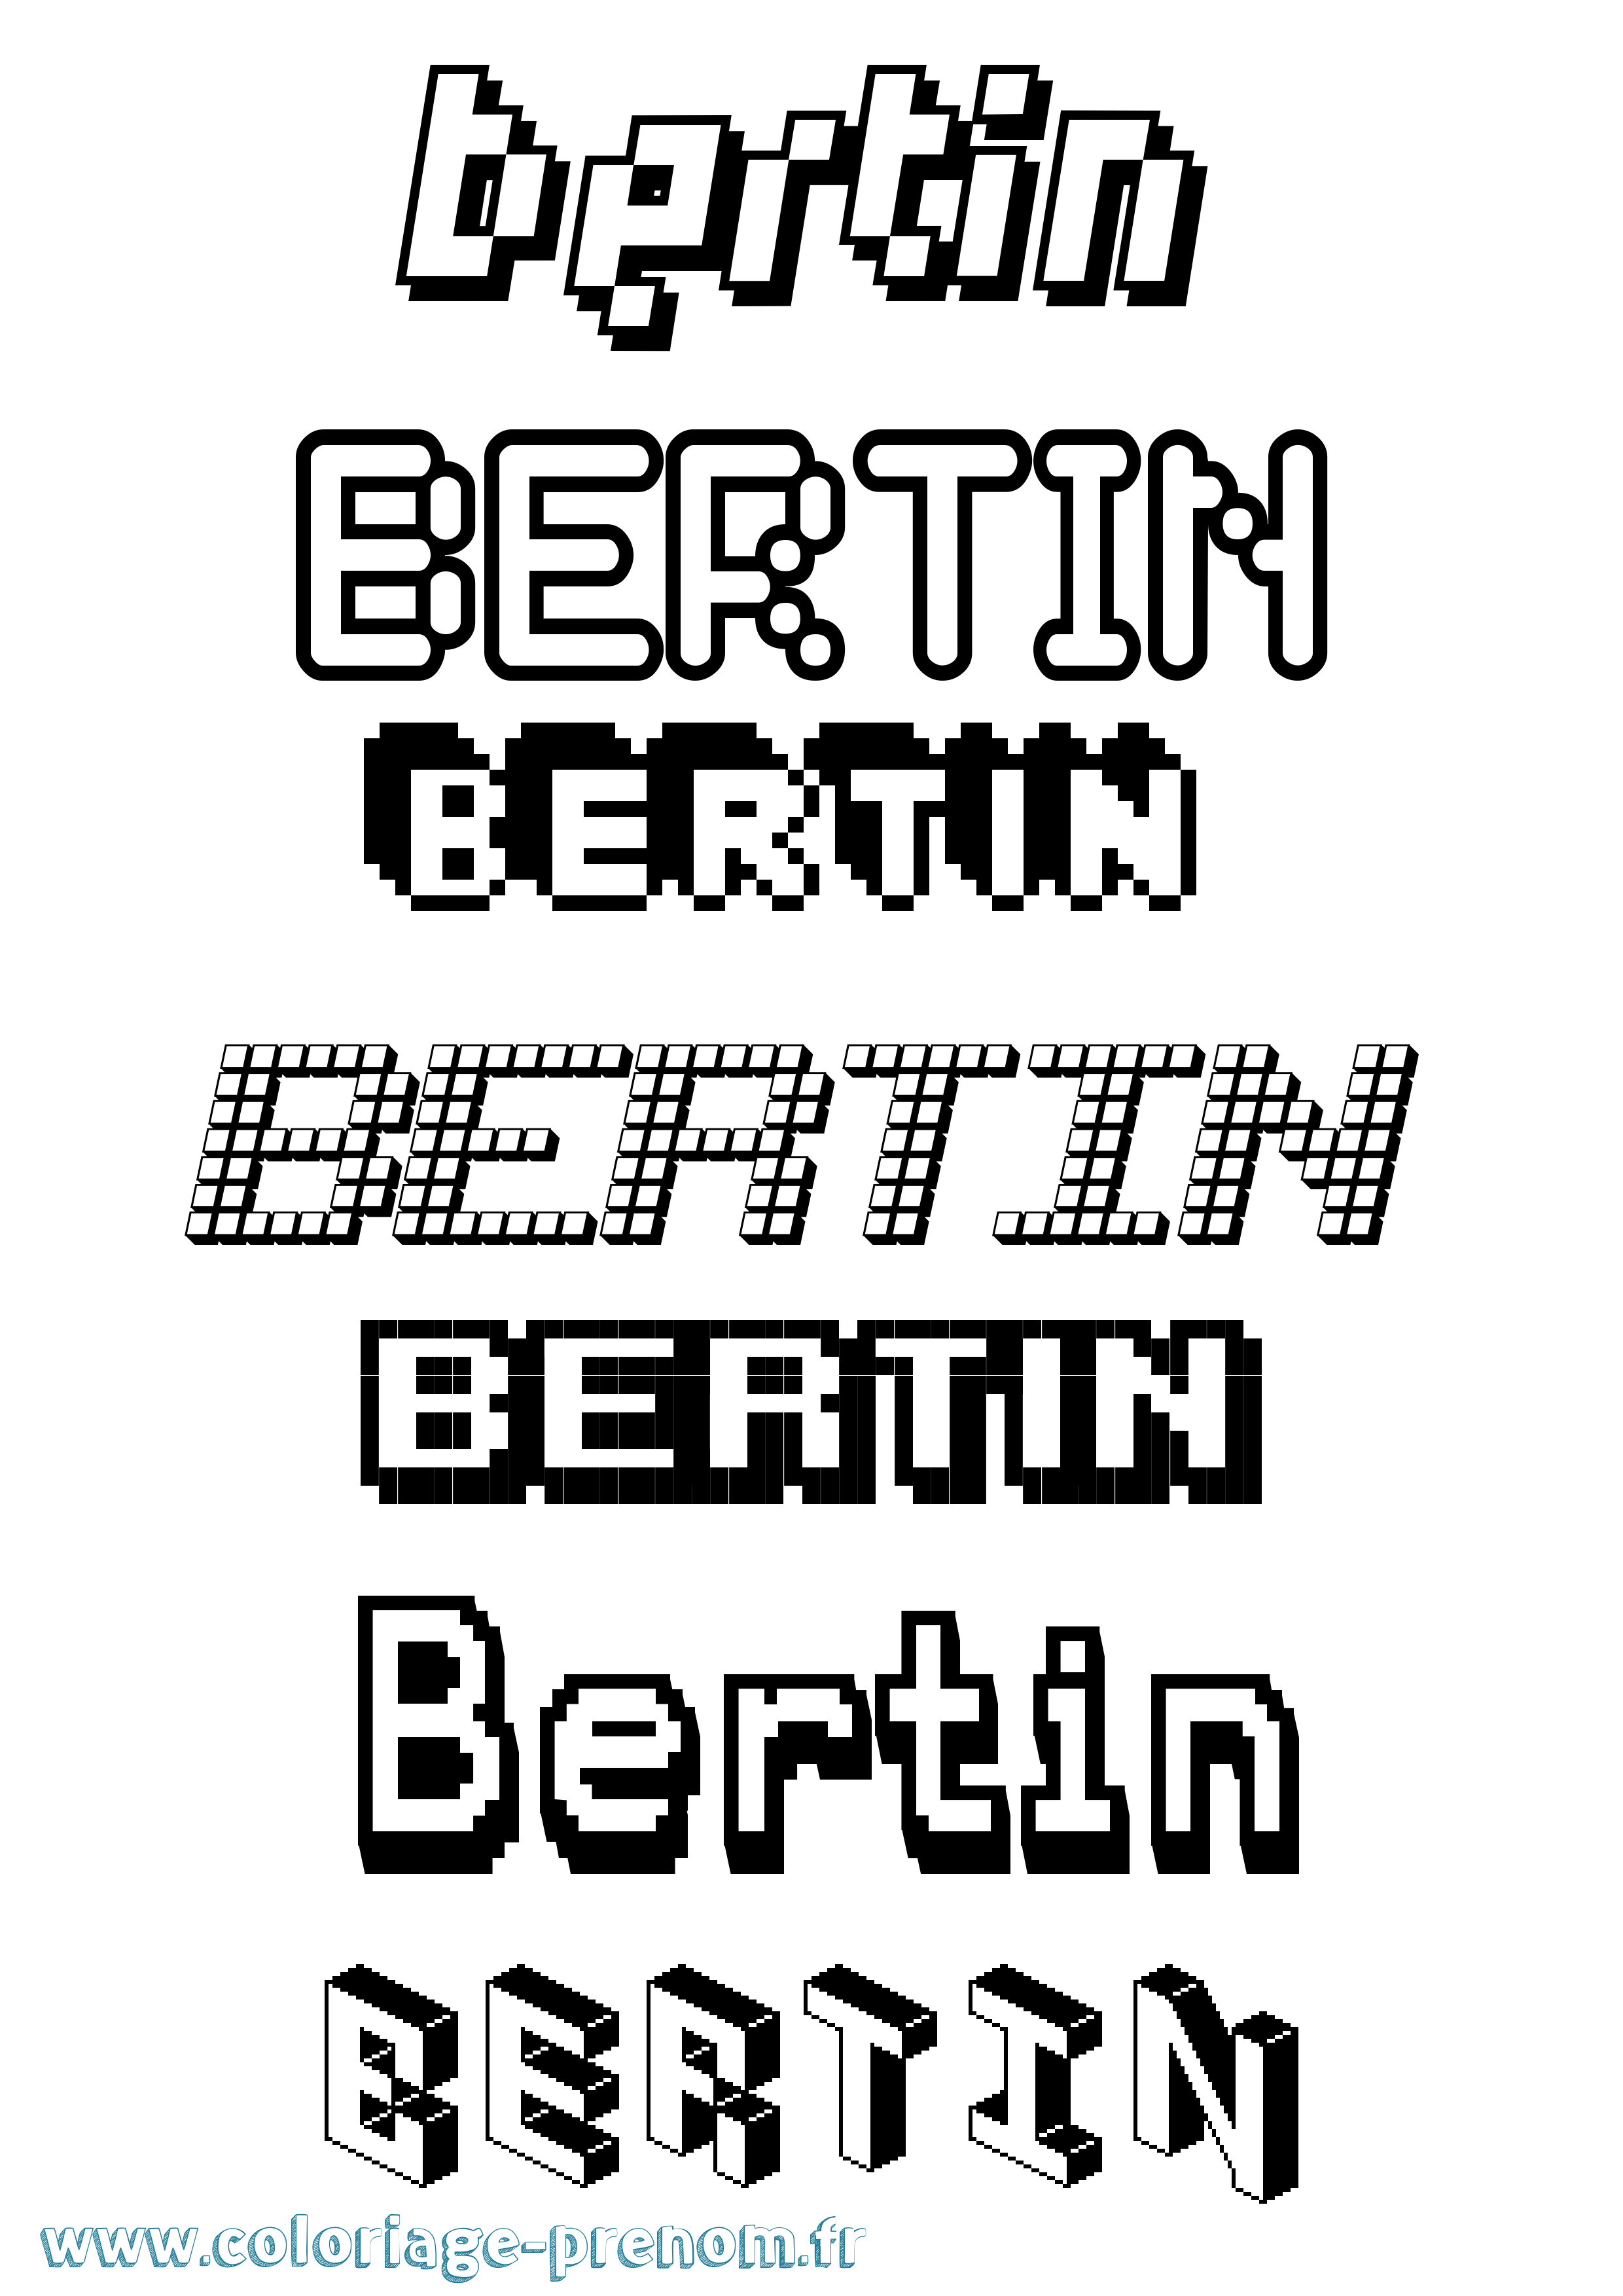 Coloriage prénom Bertin Pixel